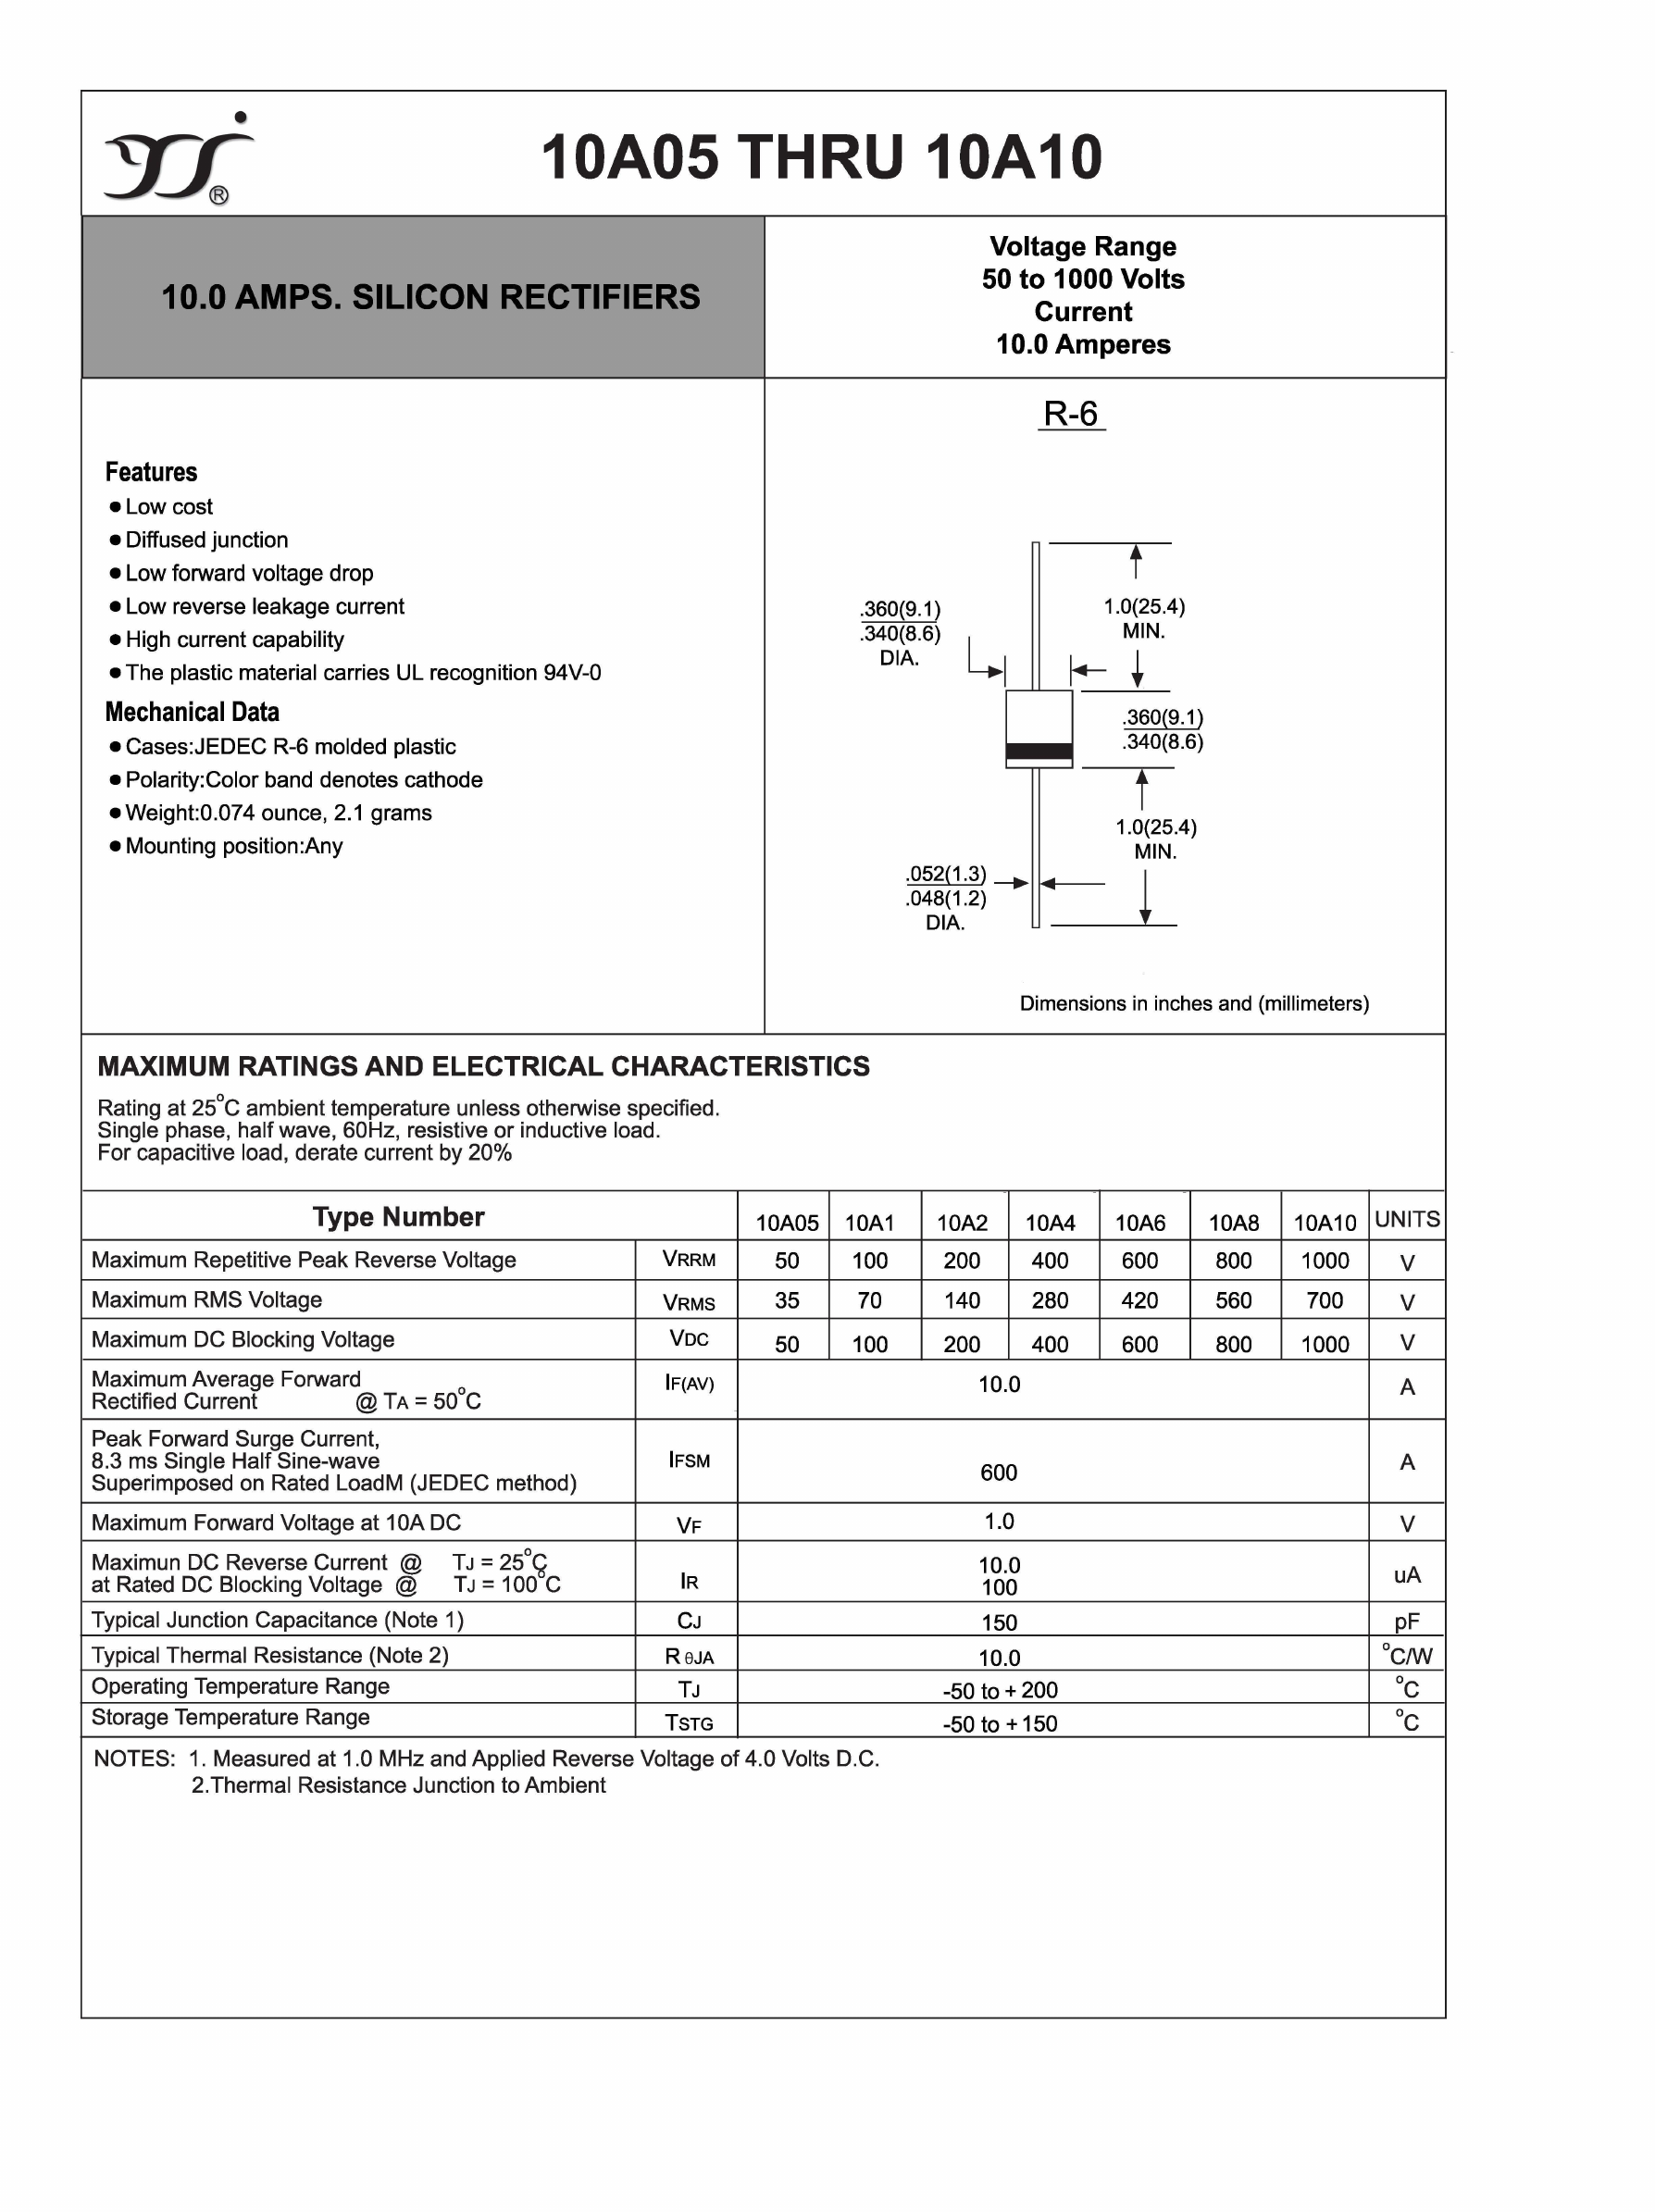 10A05 Datasheet PDF Yangzhou yangjie electronic co., Ltd